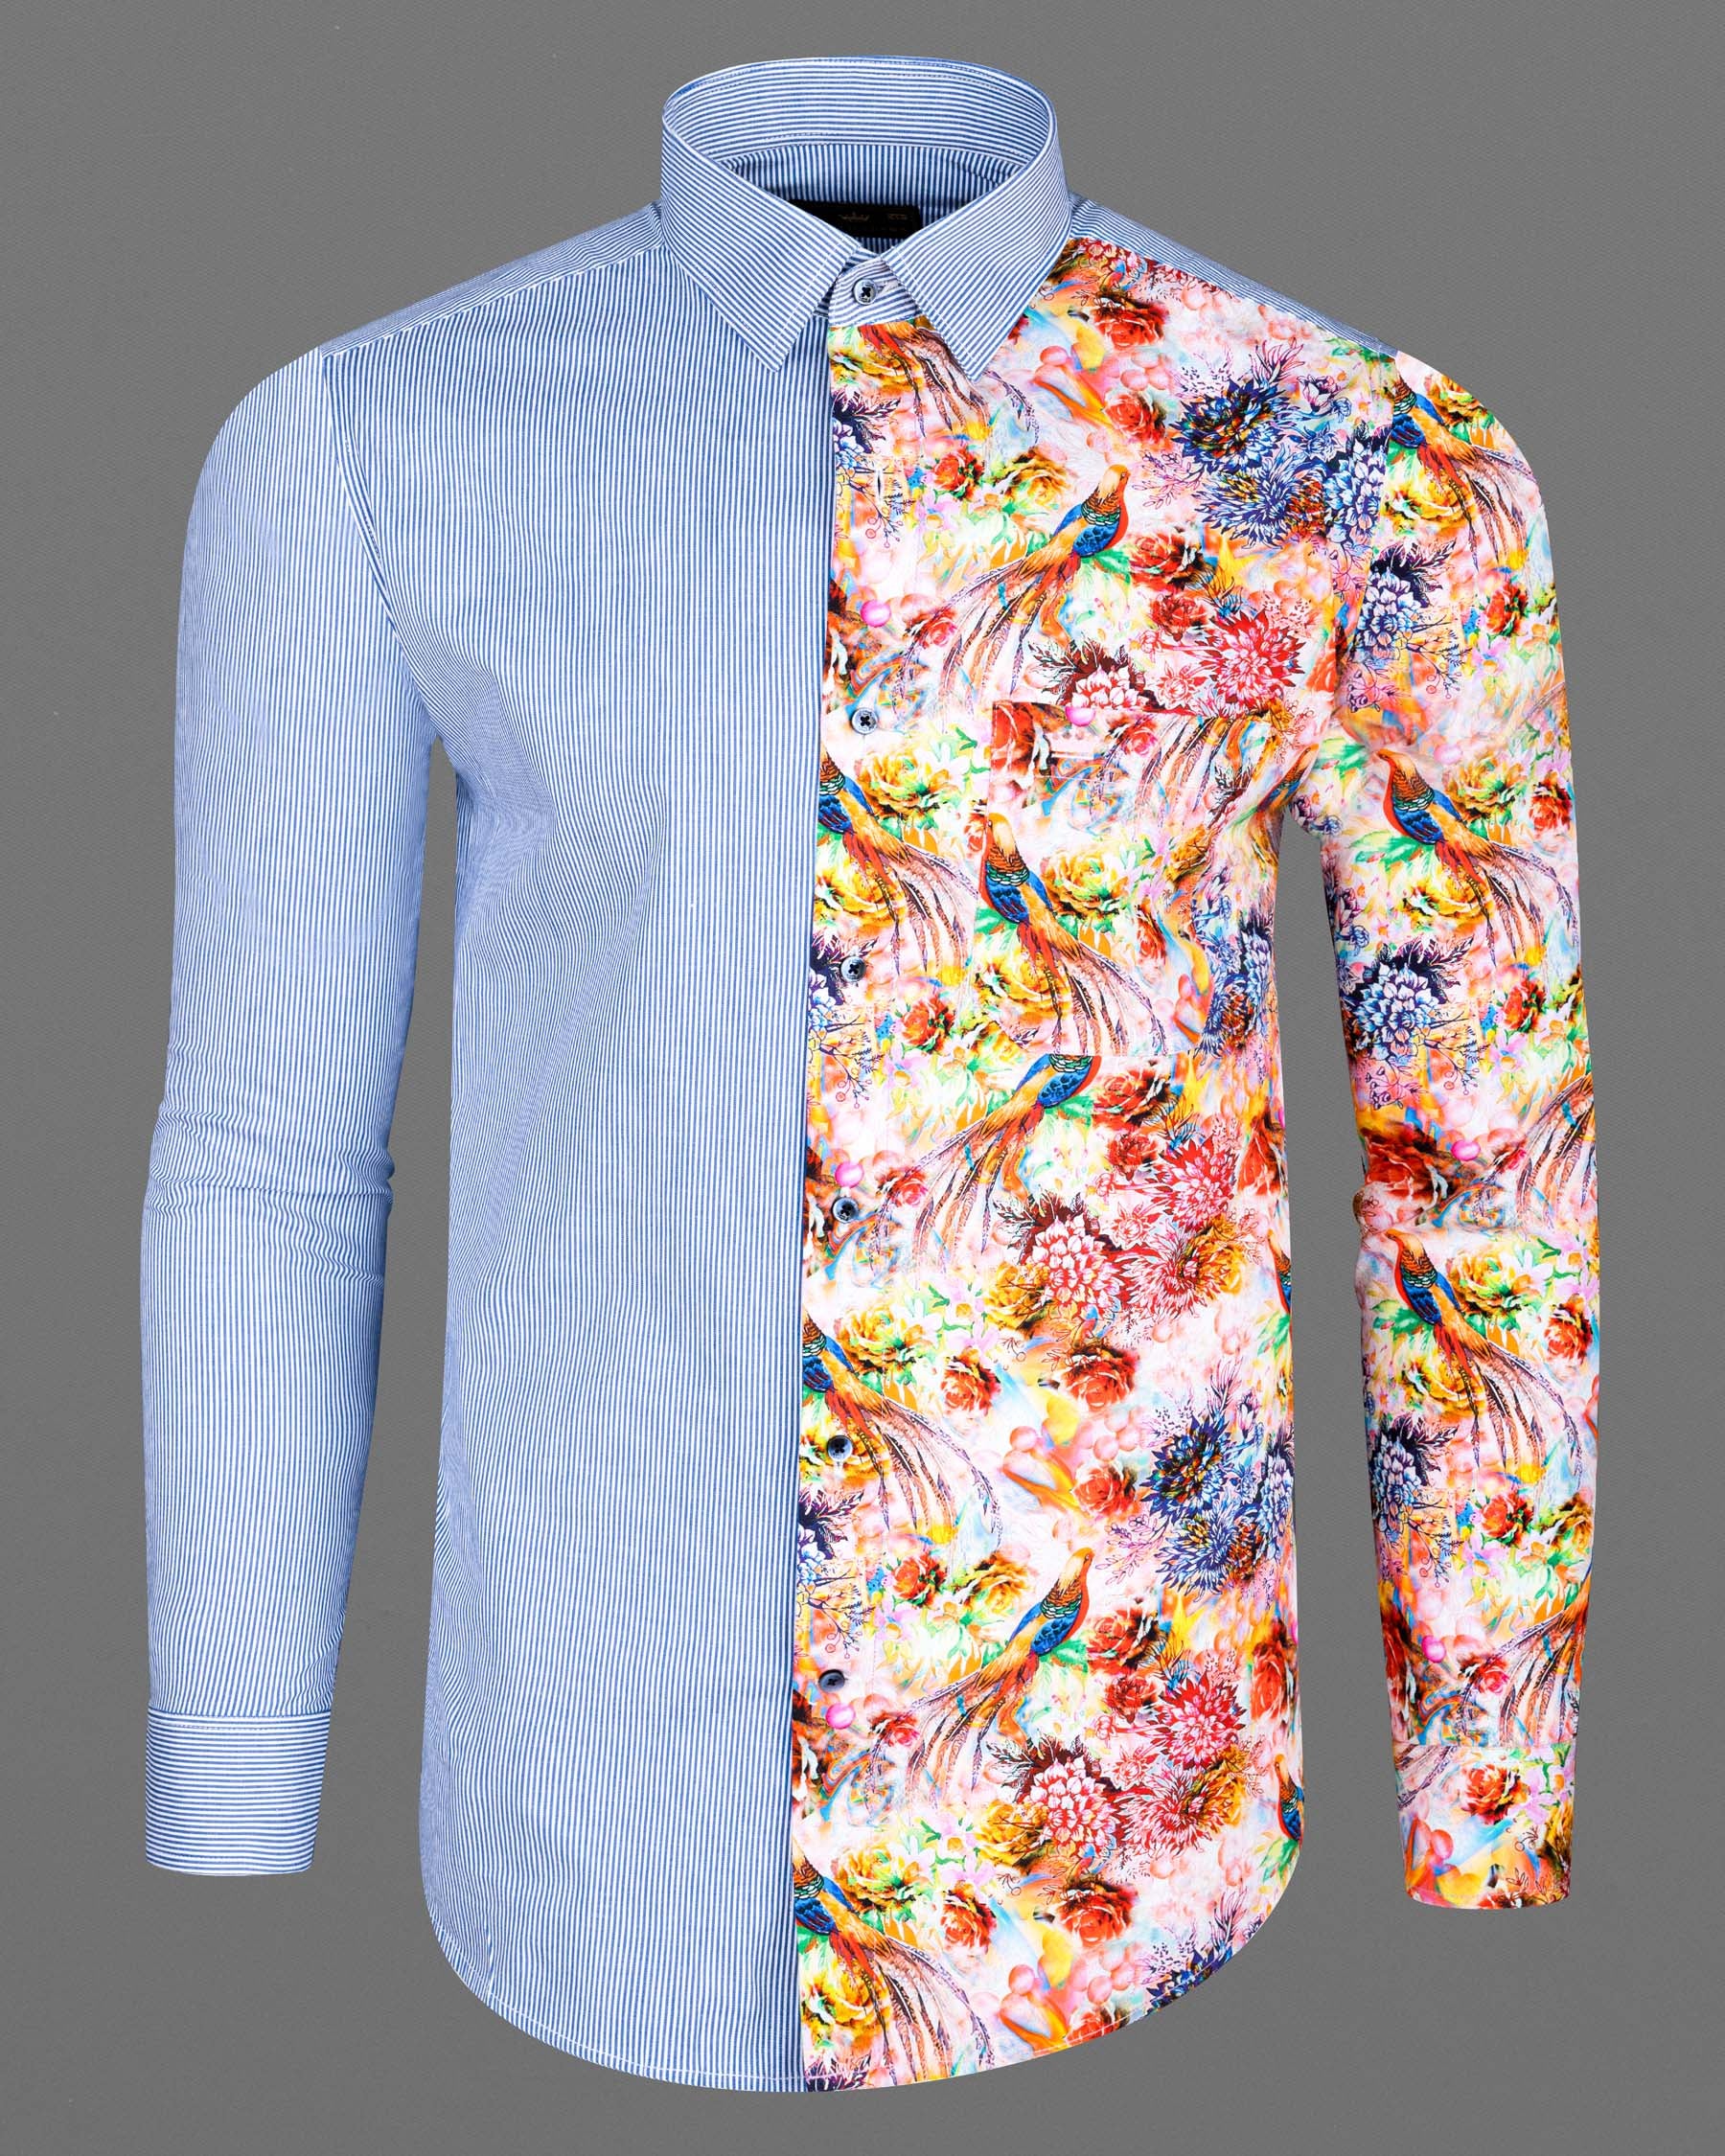 Chetwode Blue with Sunshade Orange Multicolor floral print Premium Cotton Designer Shirt 6992-BLE-P360-38,6992-BLE-P360-38,6992-BLE-P360-39,6992-BLE-P360-39,6992-BLE-P360-40,6992-BLE-P360-40,6992-BLE-P360-42,6992-BLE-P360-42,6992-BLE-P360-44,6992-BLE-P360-44,6992-BLE-P360-46,6992-BLE-P360-46,6992-BLE-P360-48,6992-BLE-P360-48,6992-BLE-P360-50,6992-BLE-P360-50,6992-BLE-P360-52,6992-BLE-P360-52